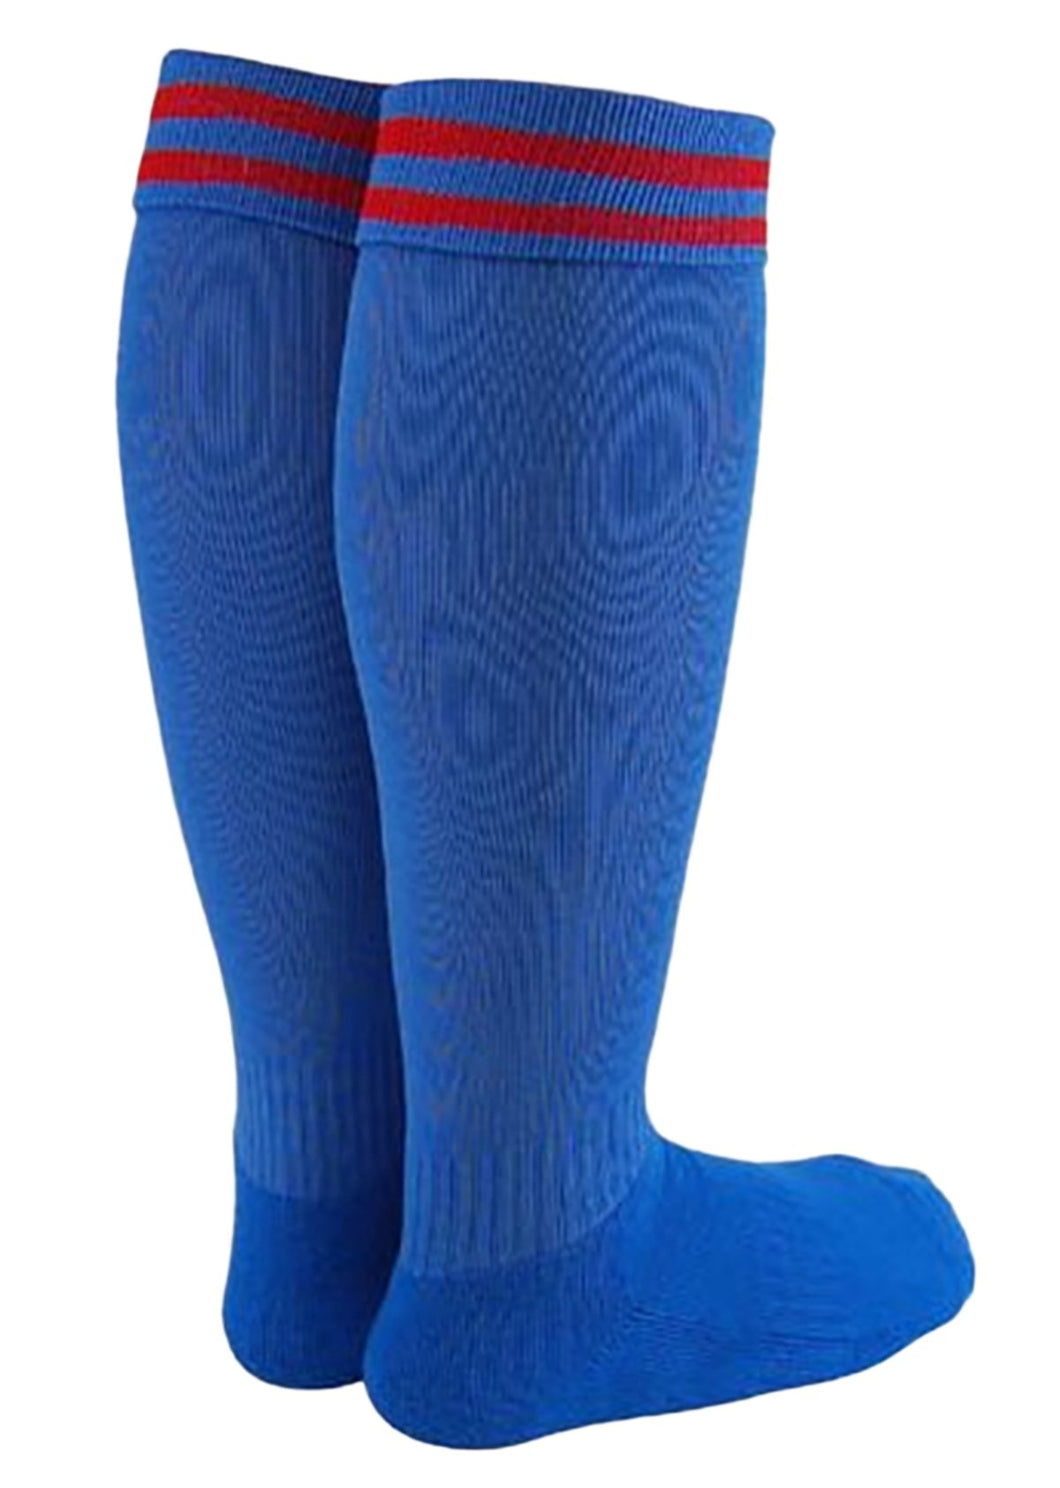 Lian Style Boy's 1 Pair Knee-high Sports Socks for Baseball/Soccer/Lacrosse XL002 XS Blue